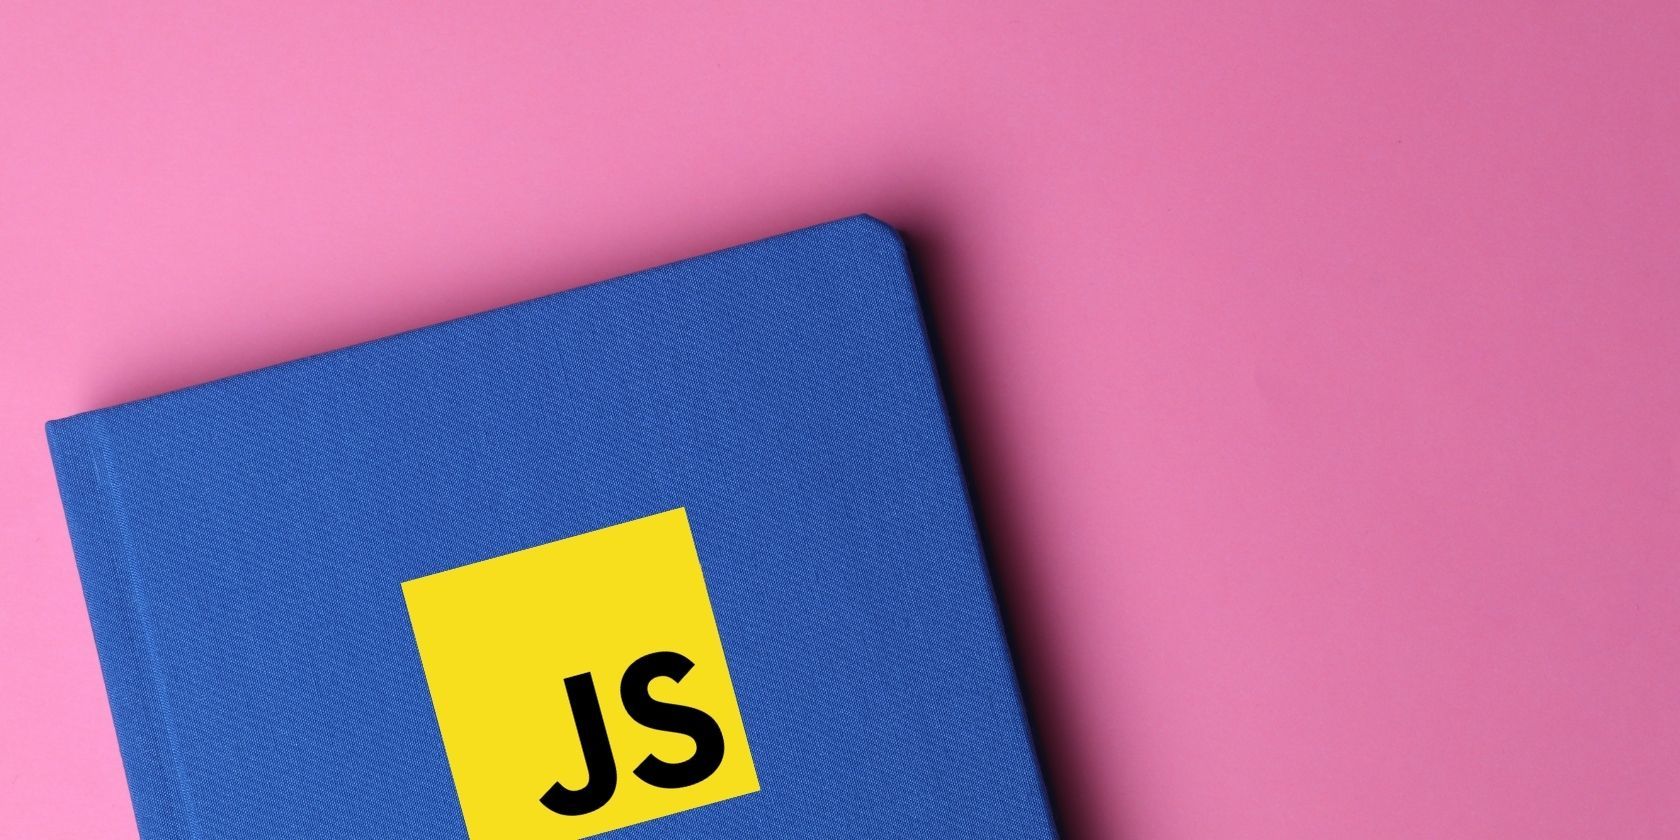 JavaScript logo on top of book